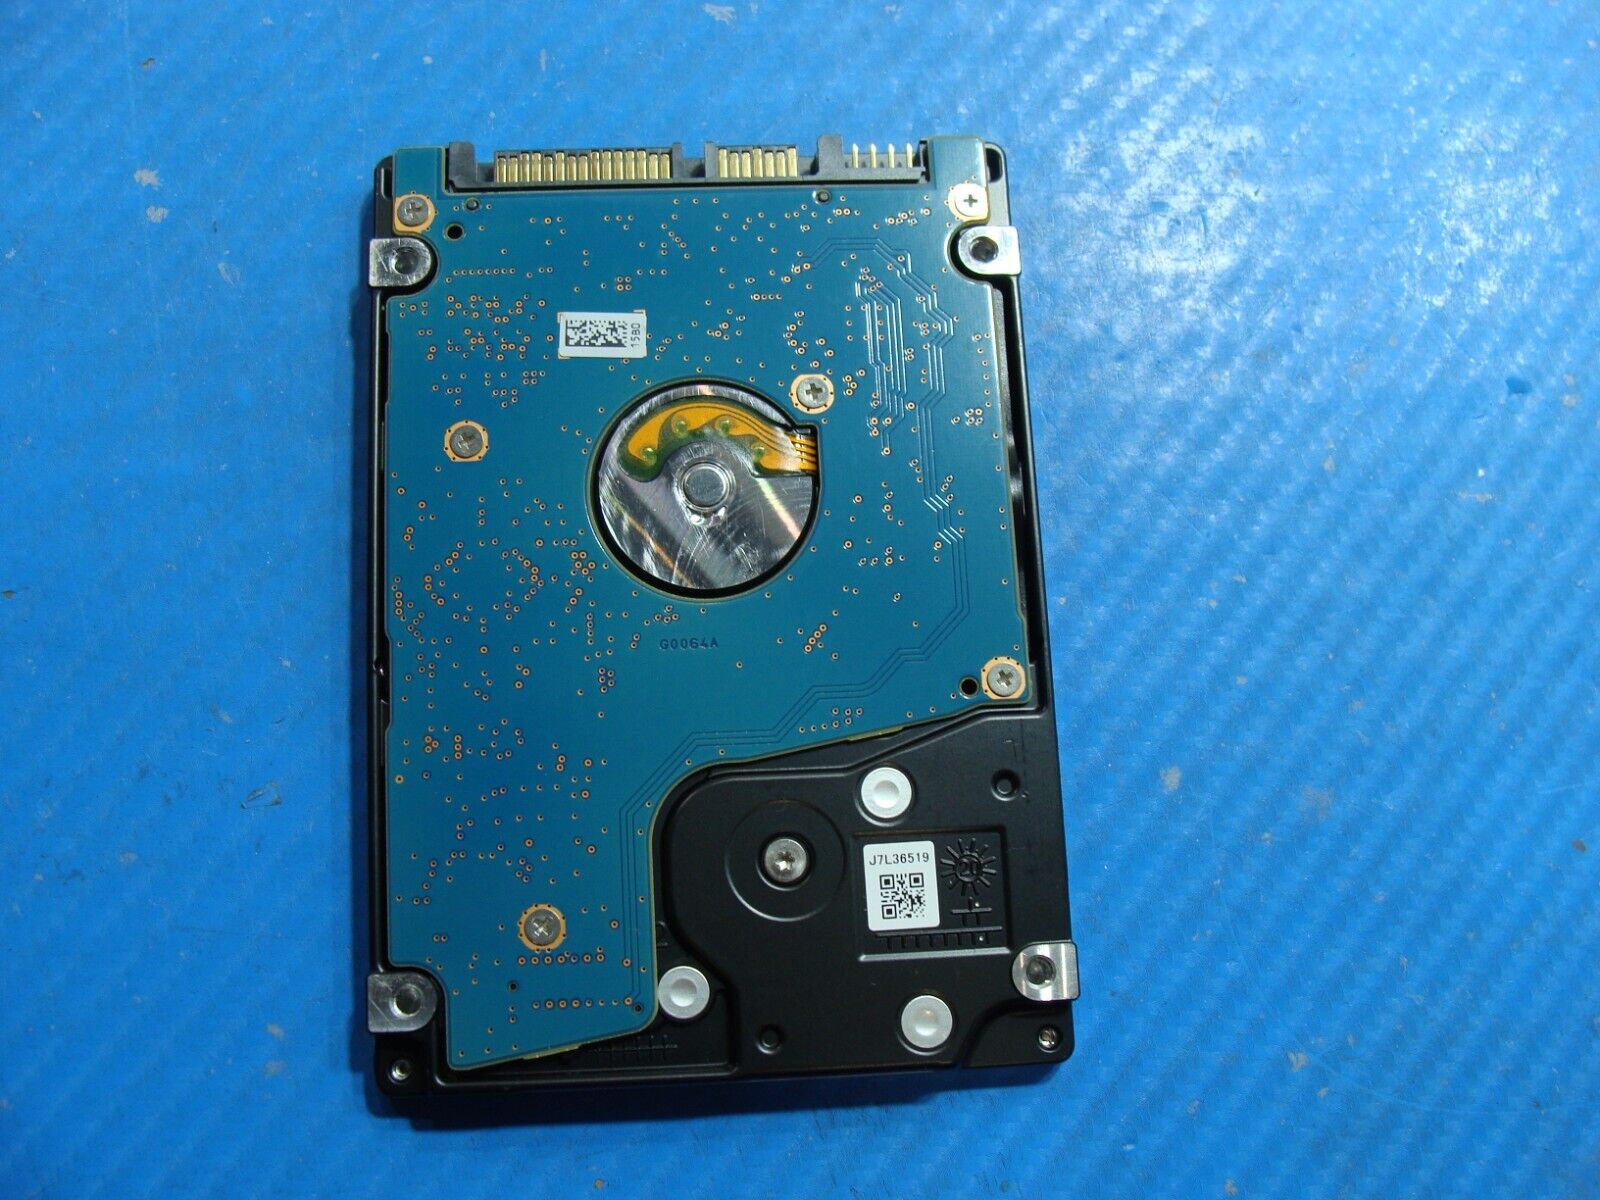 HP 17-by3635cl Toshiba 1TB 2.5